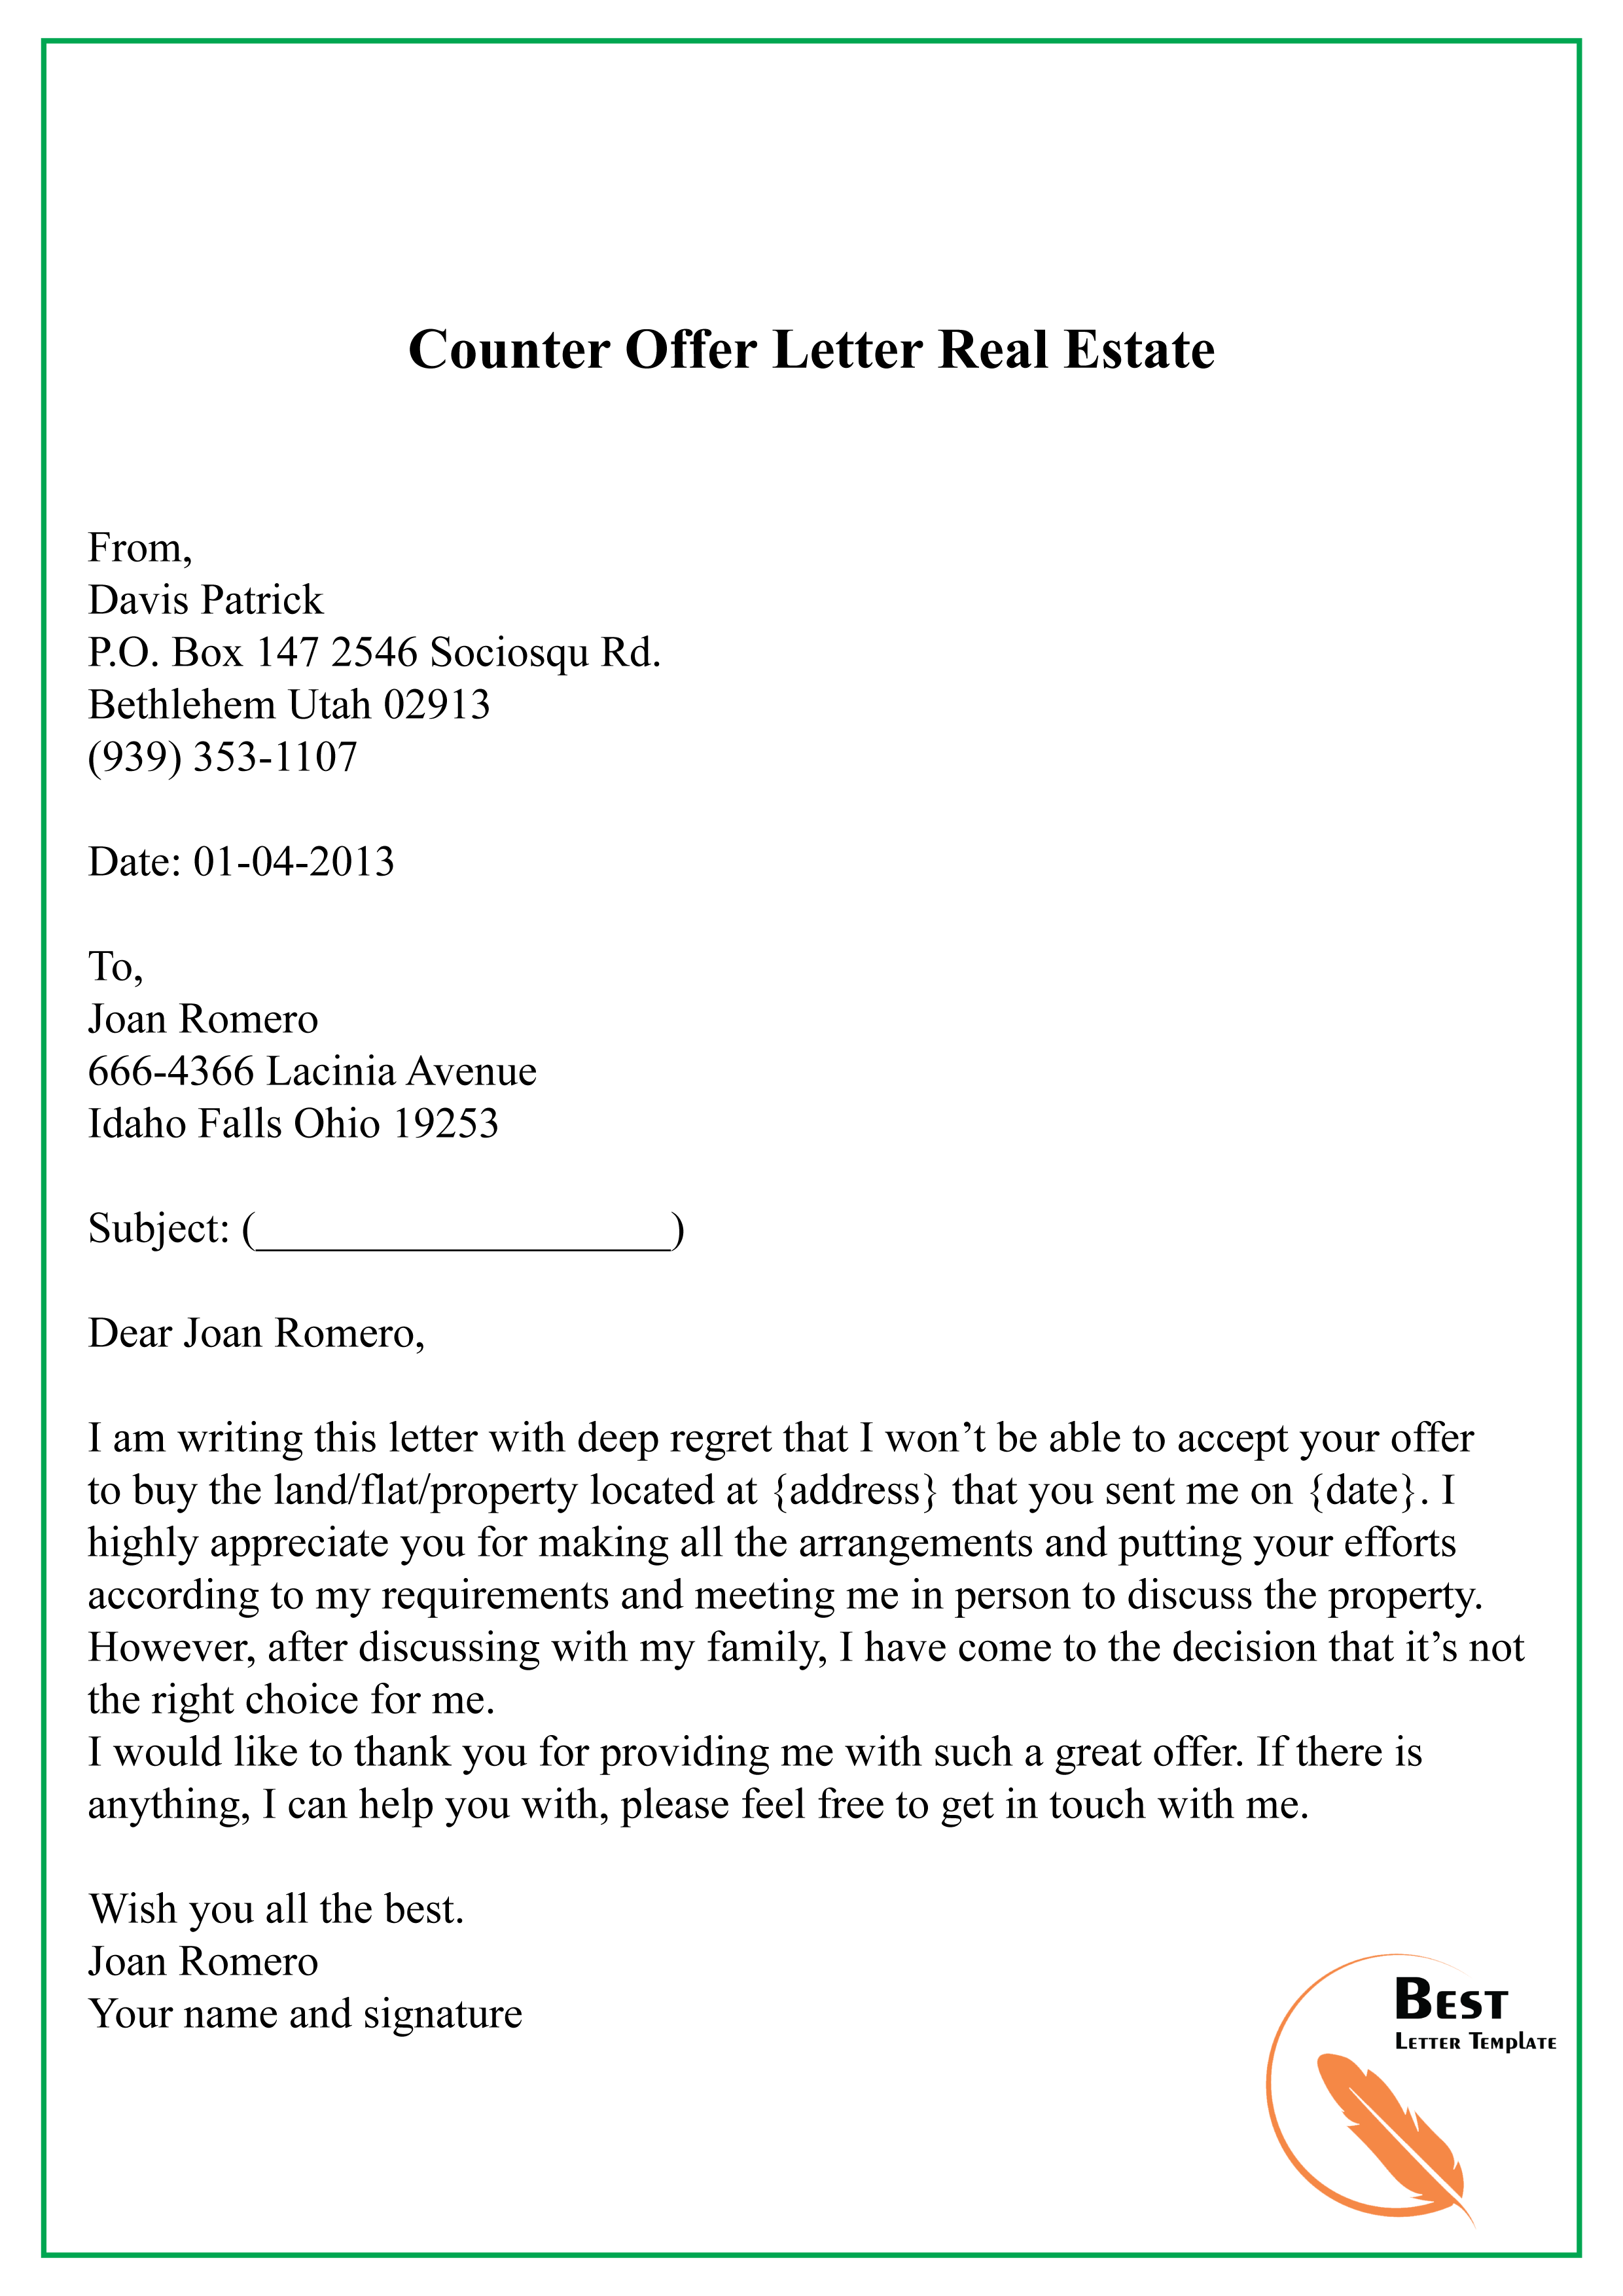 Counter Offer Letter Real Estate-01 – Best Letter Template